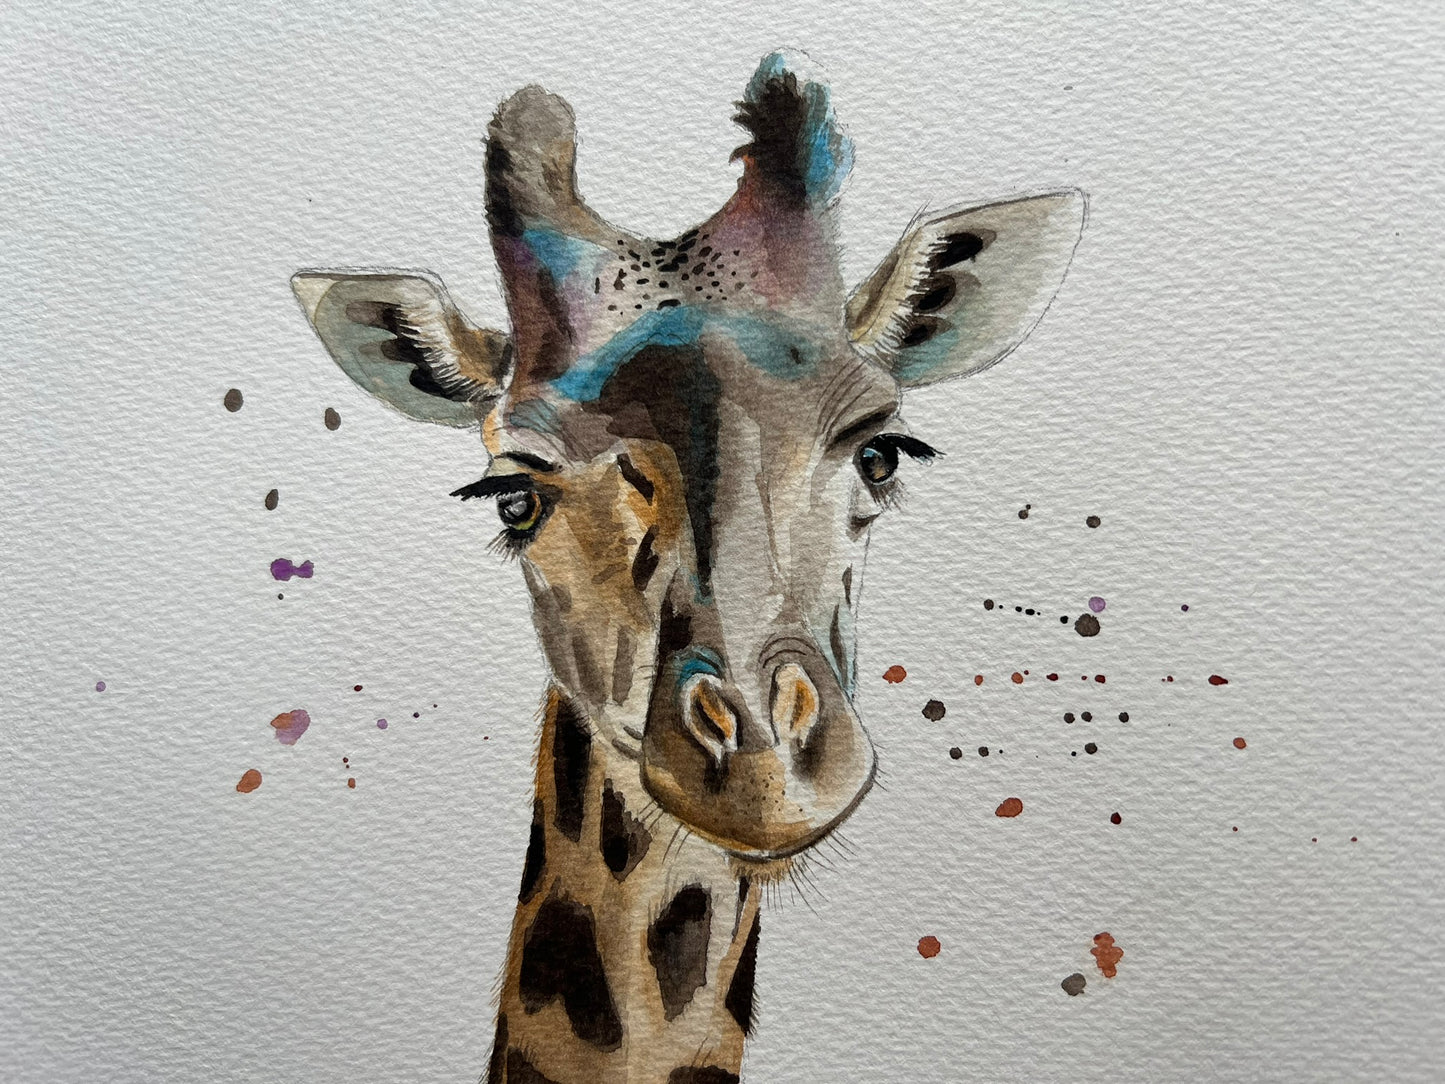 Colourful giraffe watercolour painting